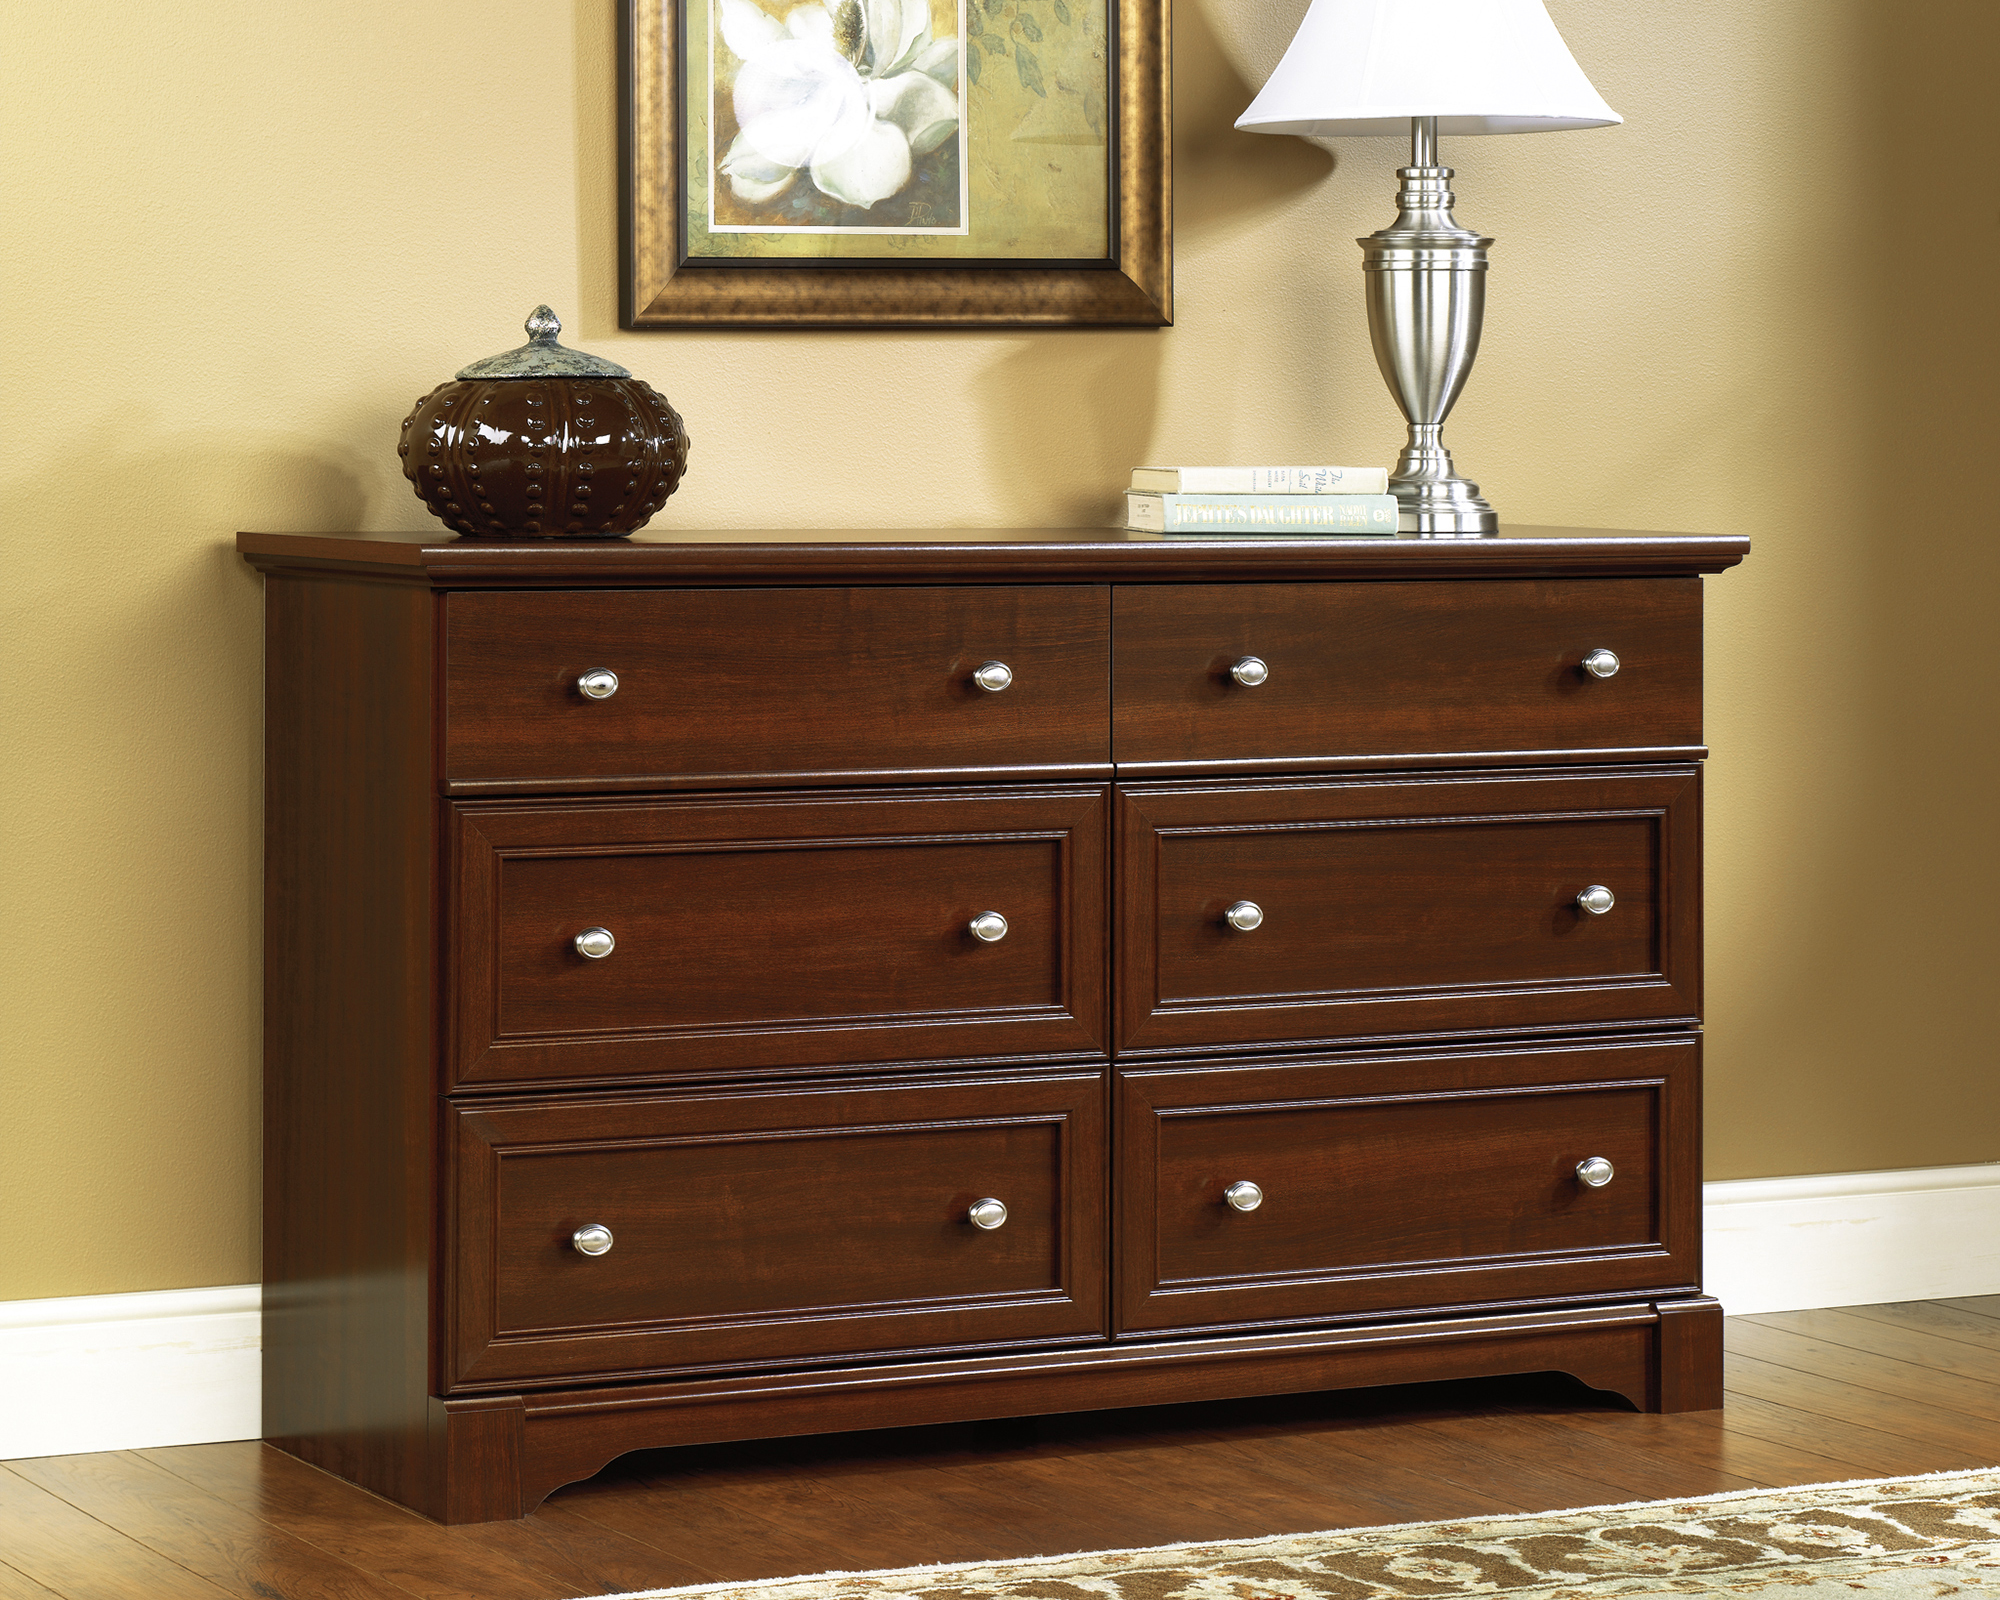 Sauder Palladia® Dresser, Select Cherry finish (# 411830)